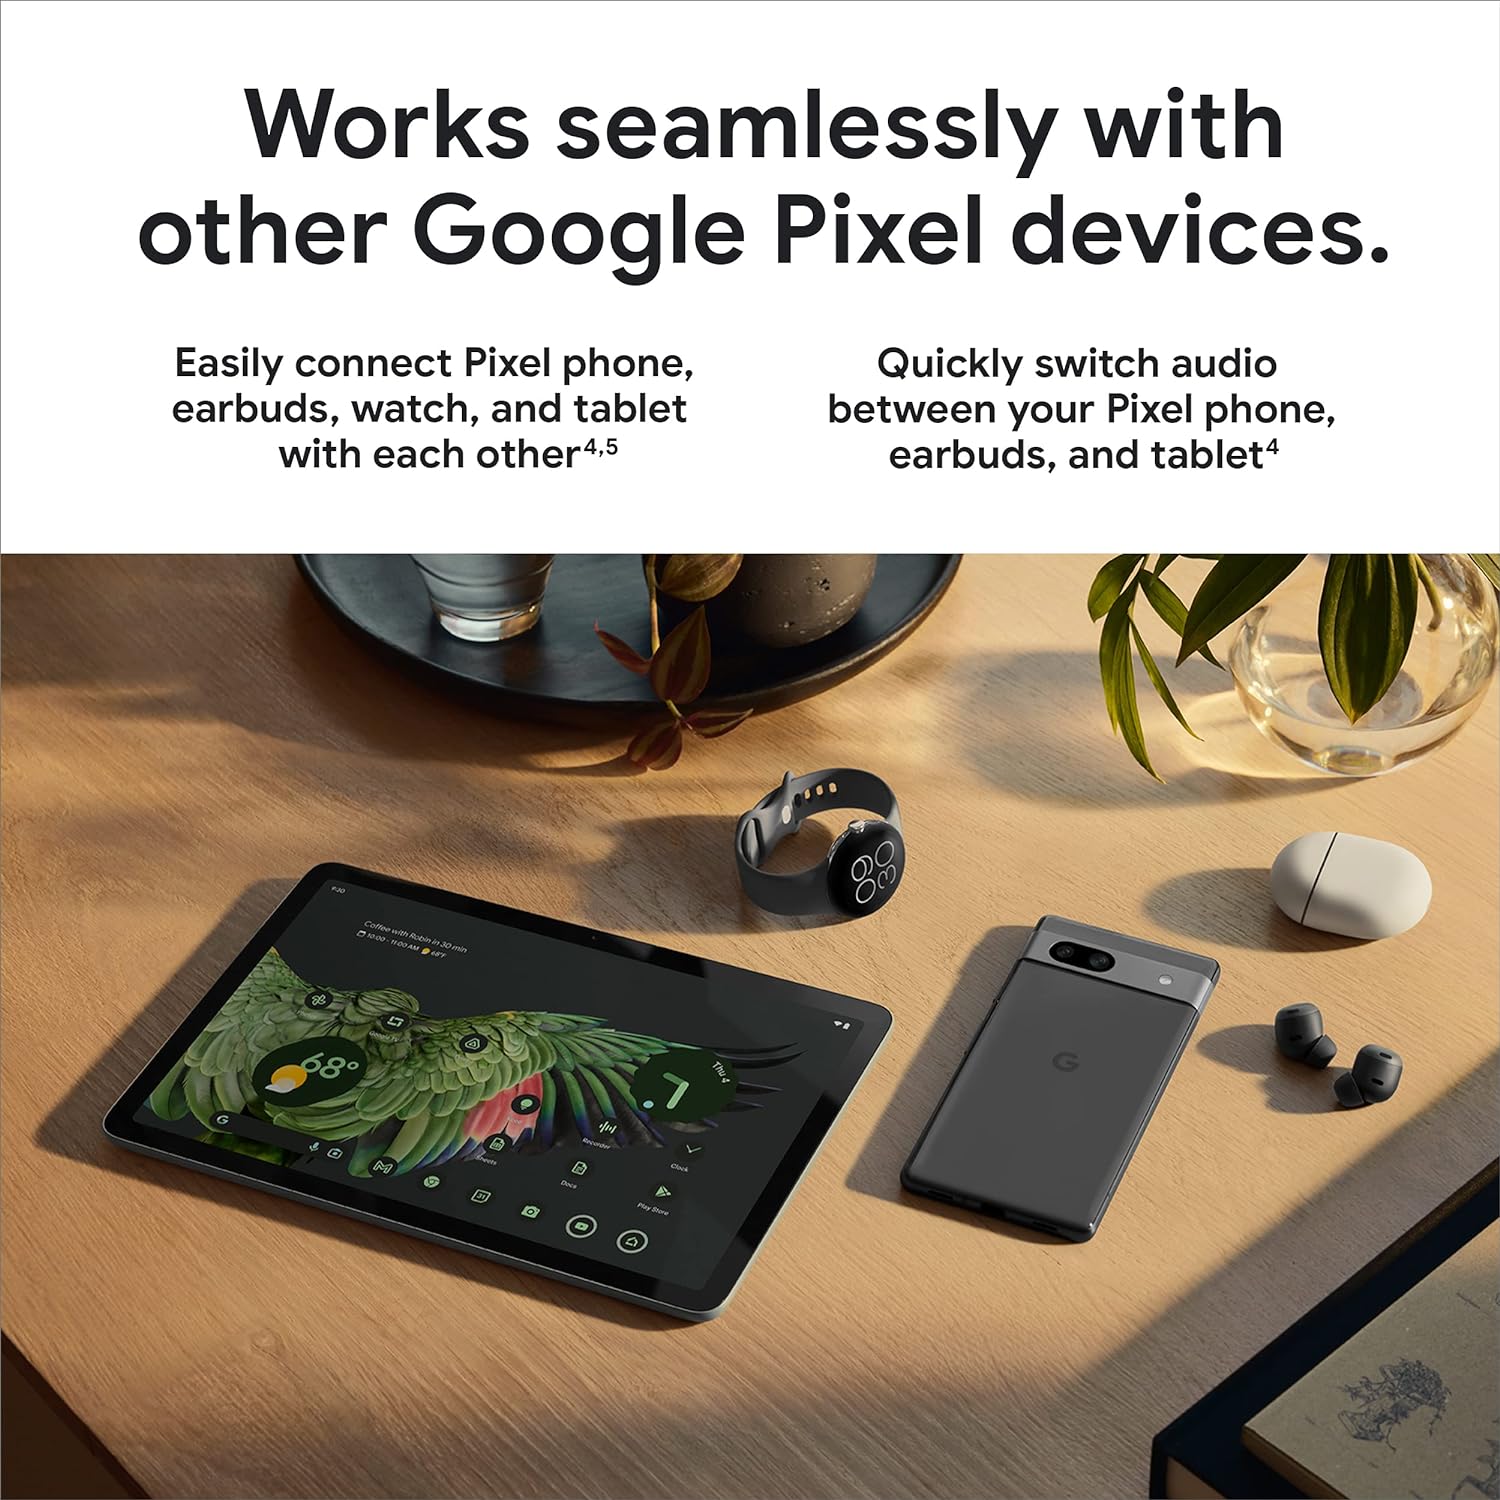 Weighing Google Pixel Tablet with Charging Speaker Dock - Porcelain/Porcelain - 128 GB